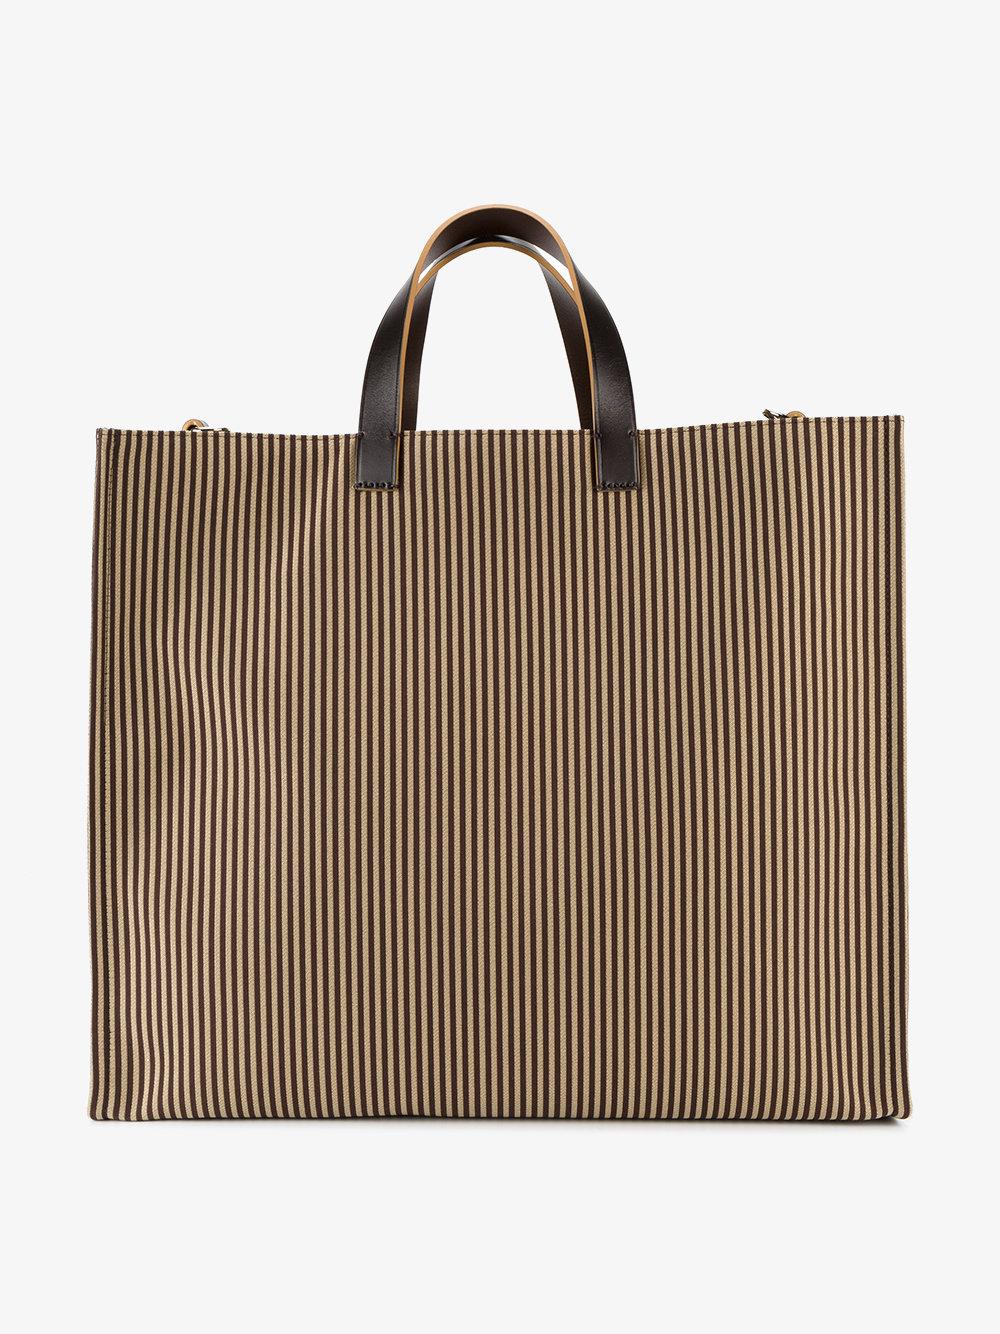 Fendi Cotton Large Logo Tote Bag in Brown for Men - Lyst